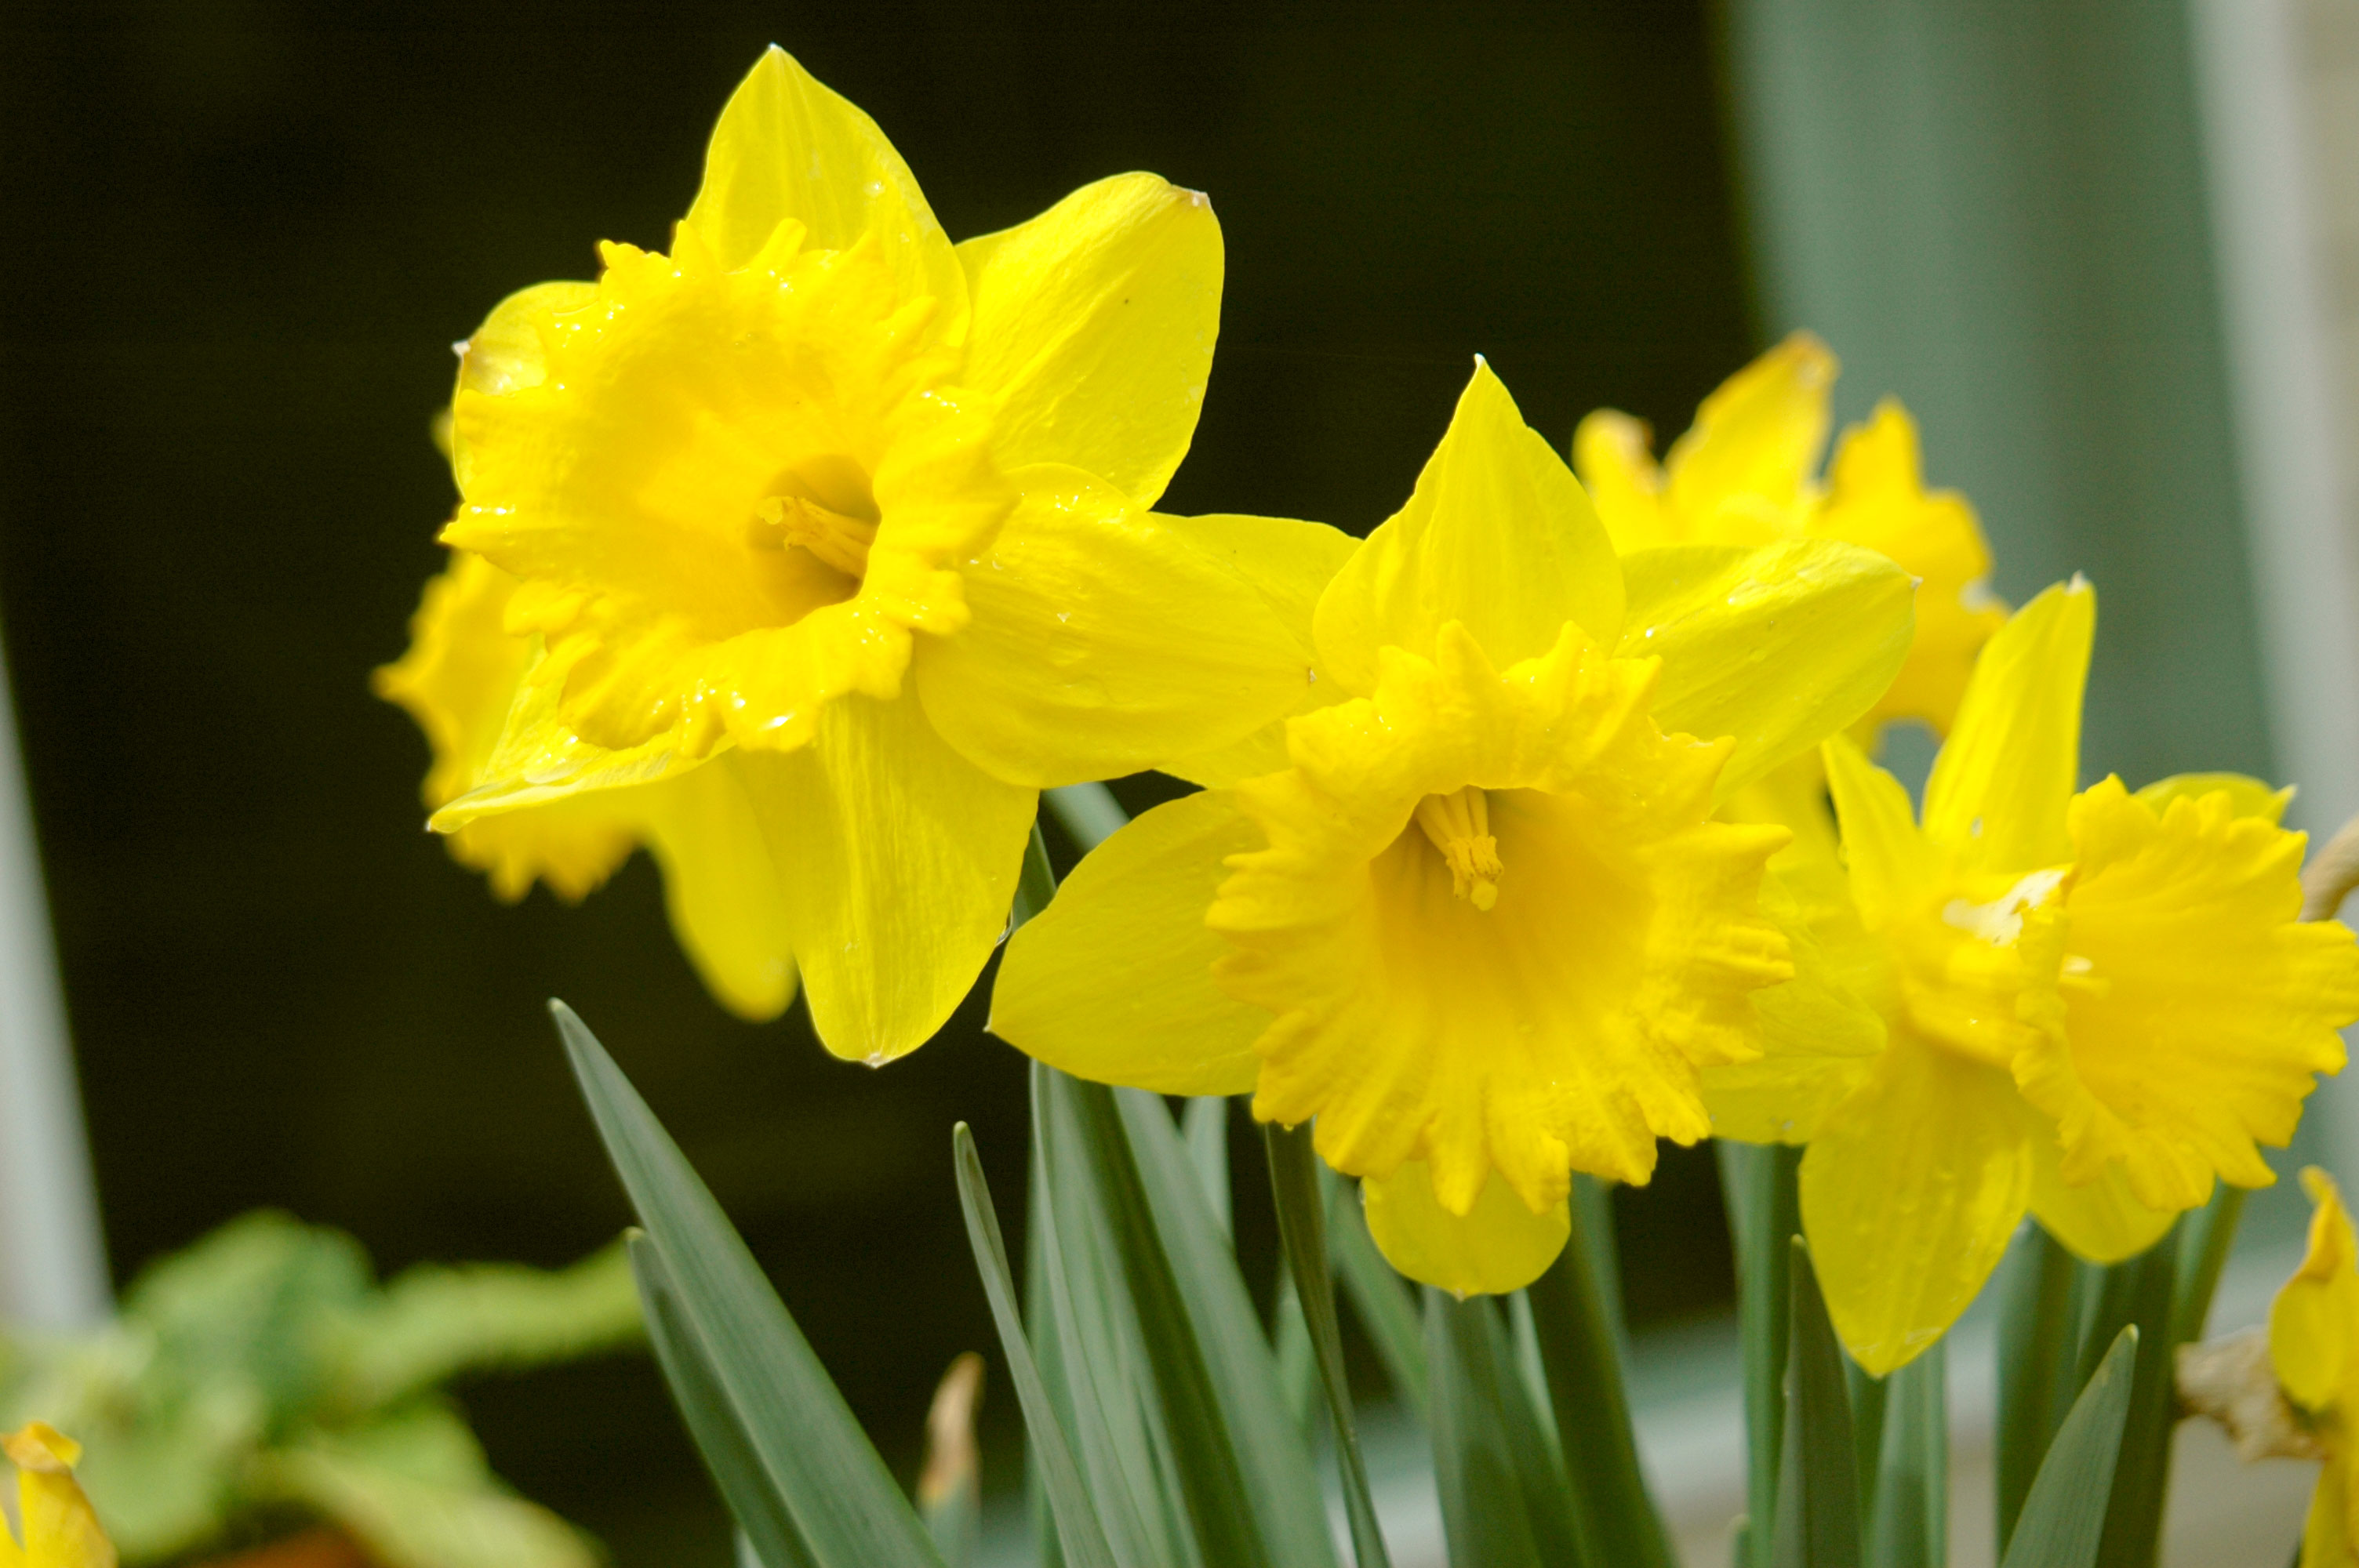 Flower Bulbs and Plants | Anemone, Daffodils, Tulip Bulbs, Cyclamen ...